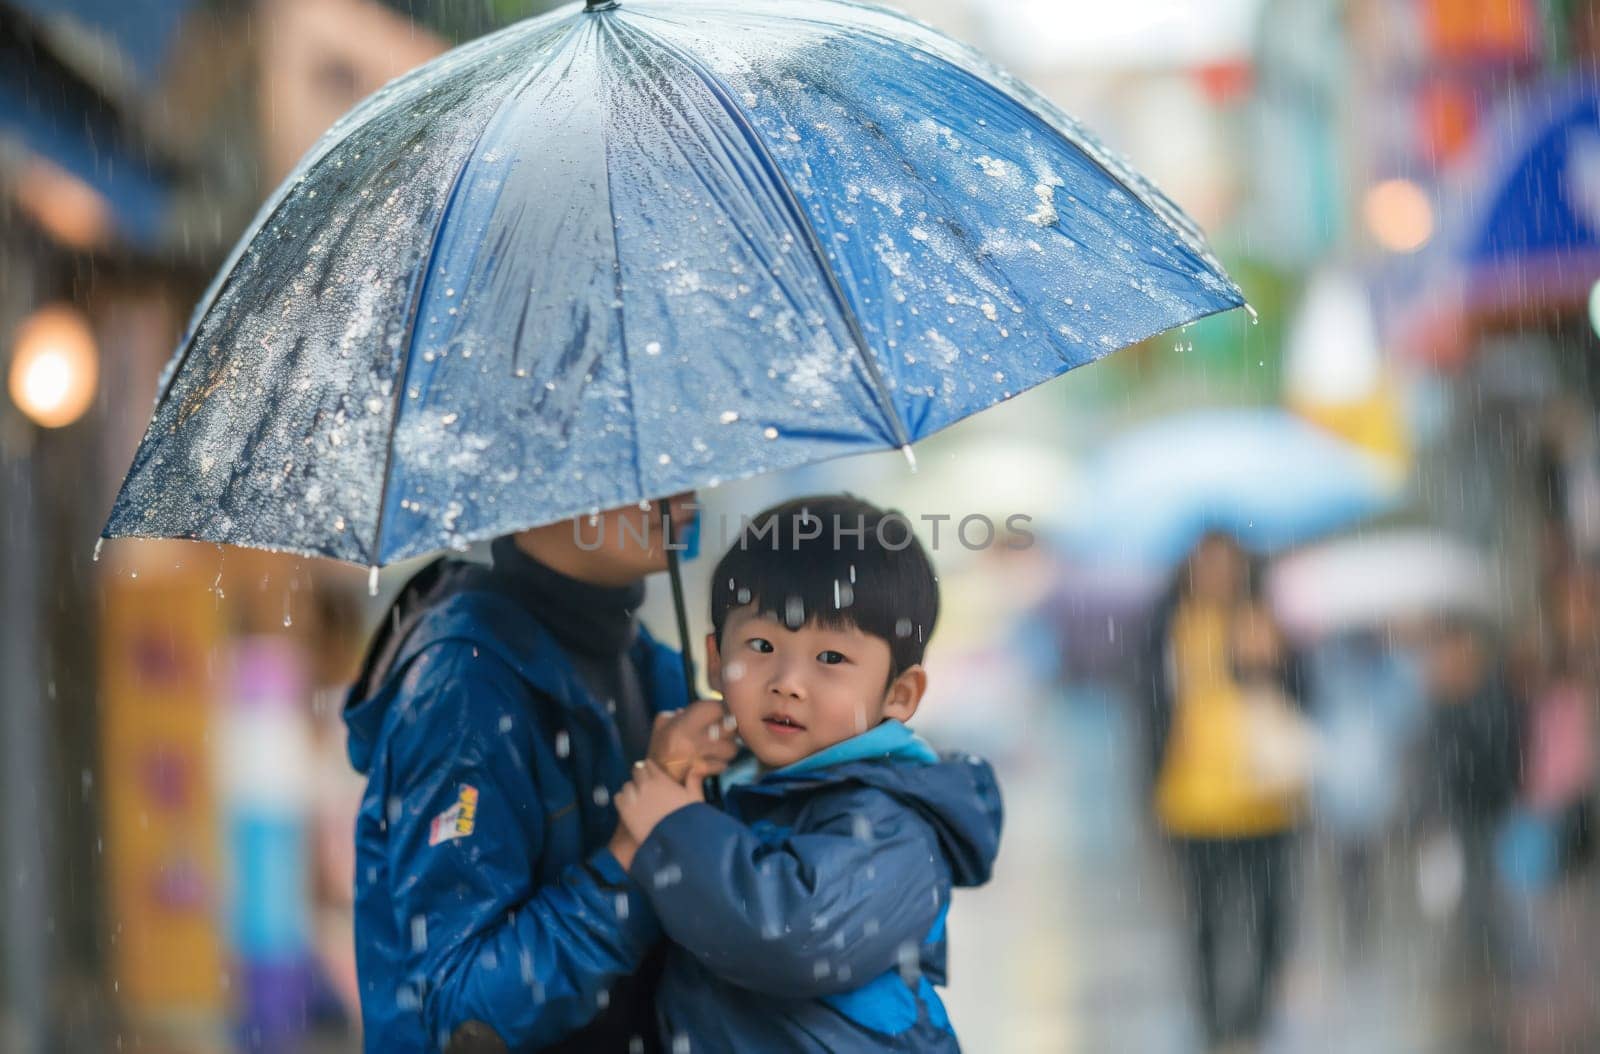 Blue umbrella rain protection by gcm